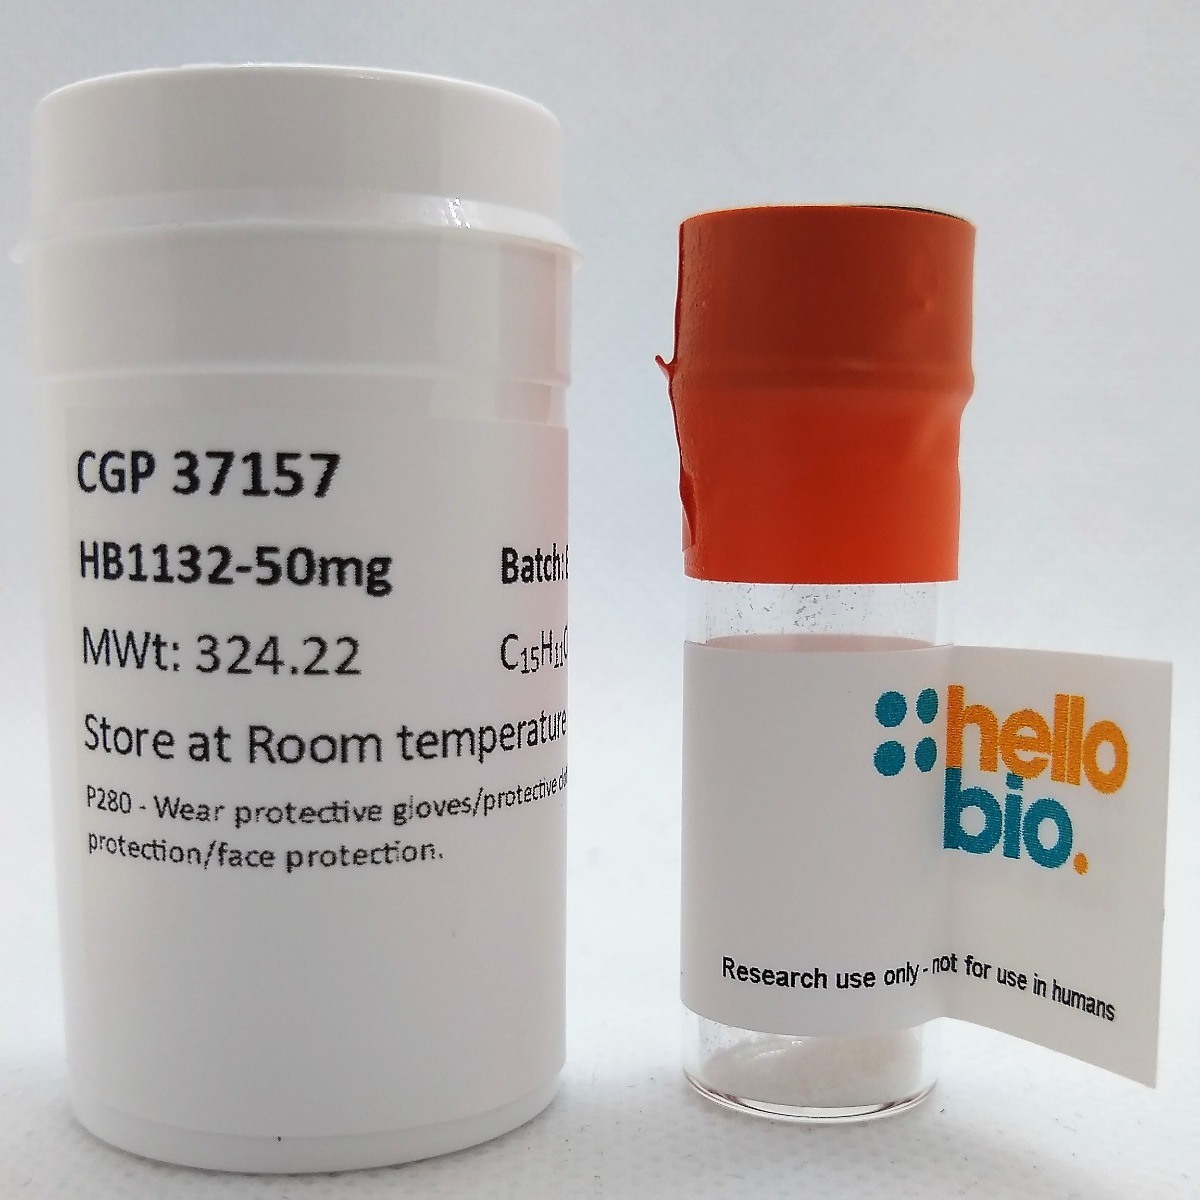 CGP 37157 product vial image | Hello Bio